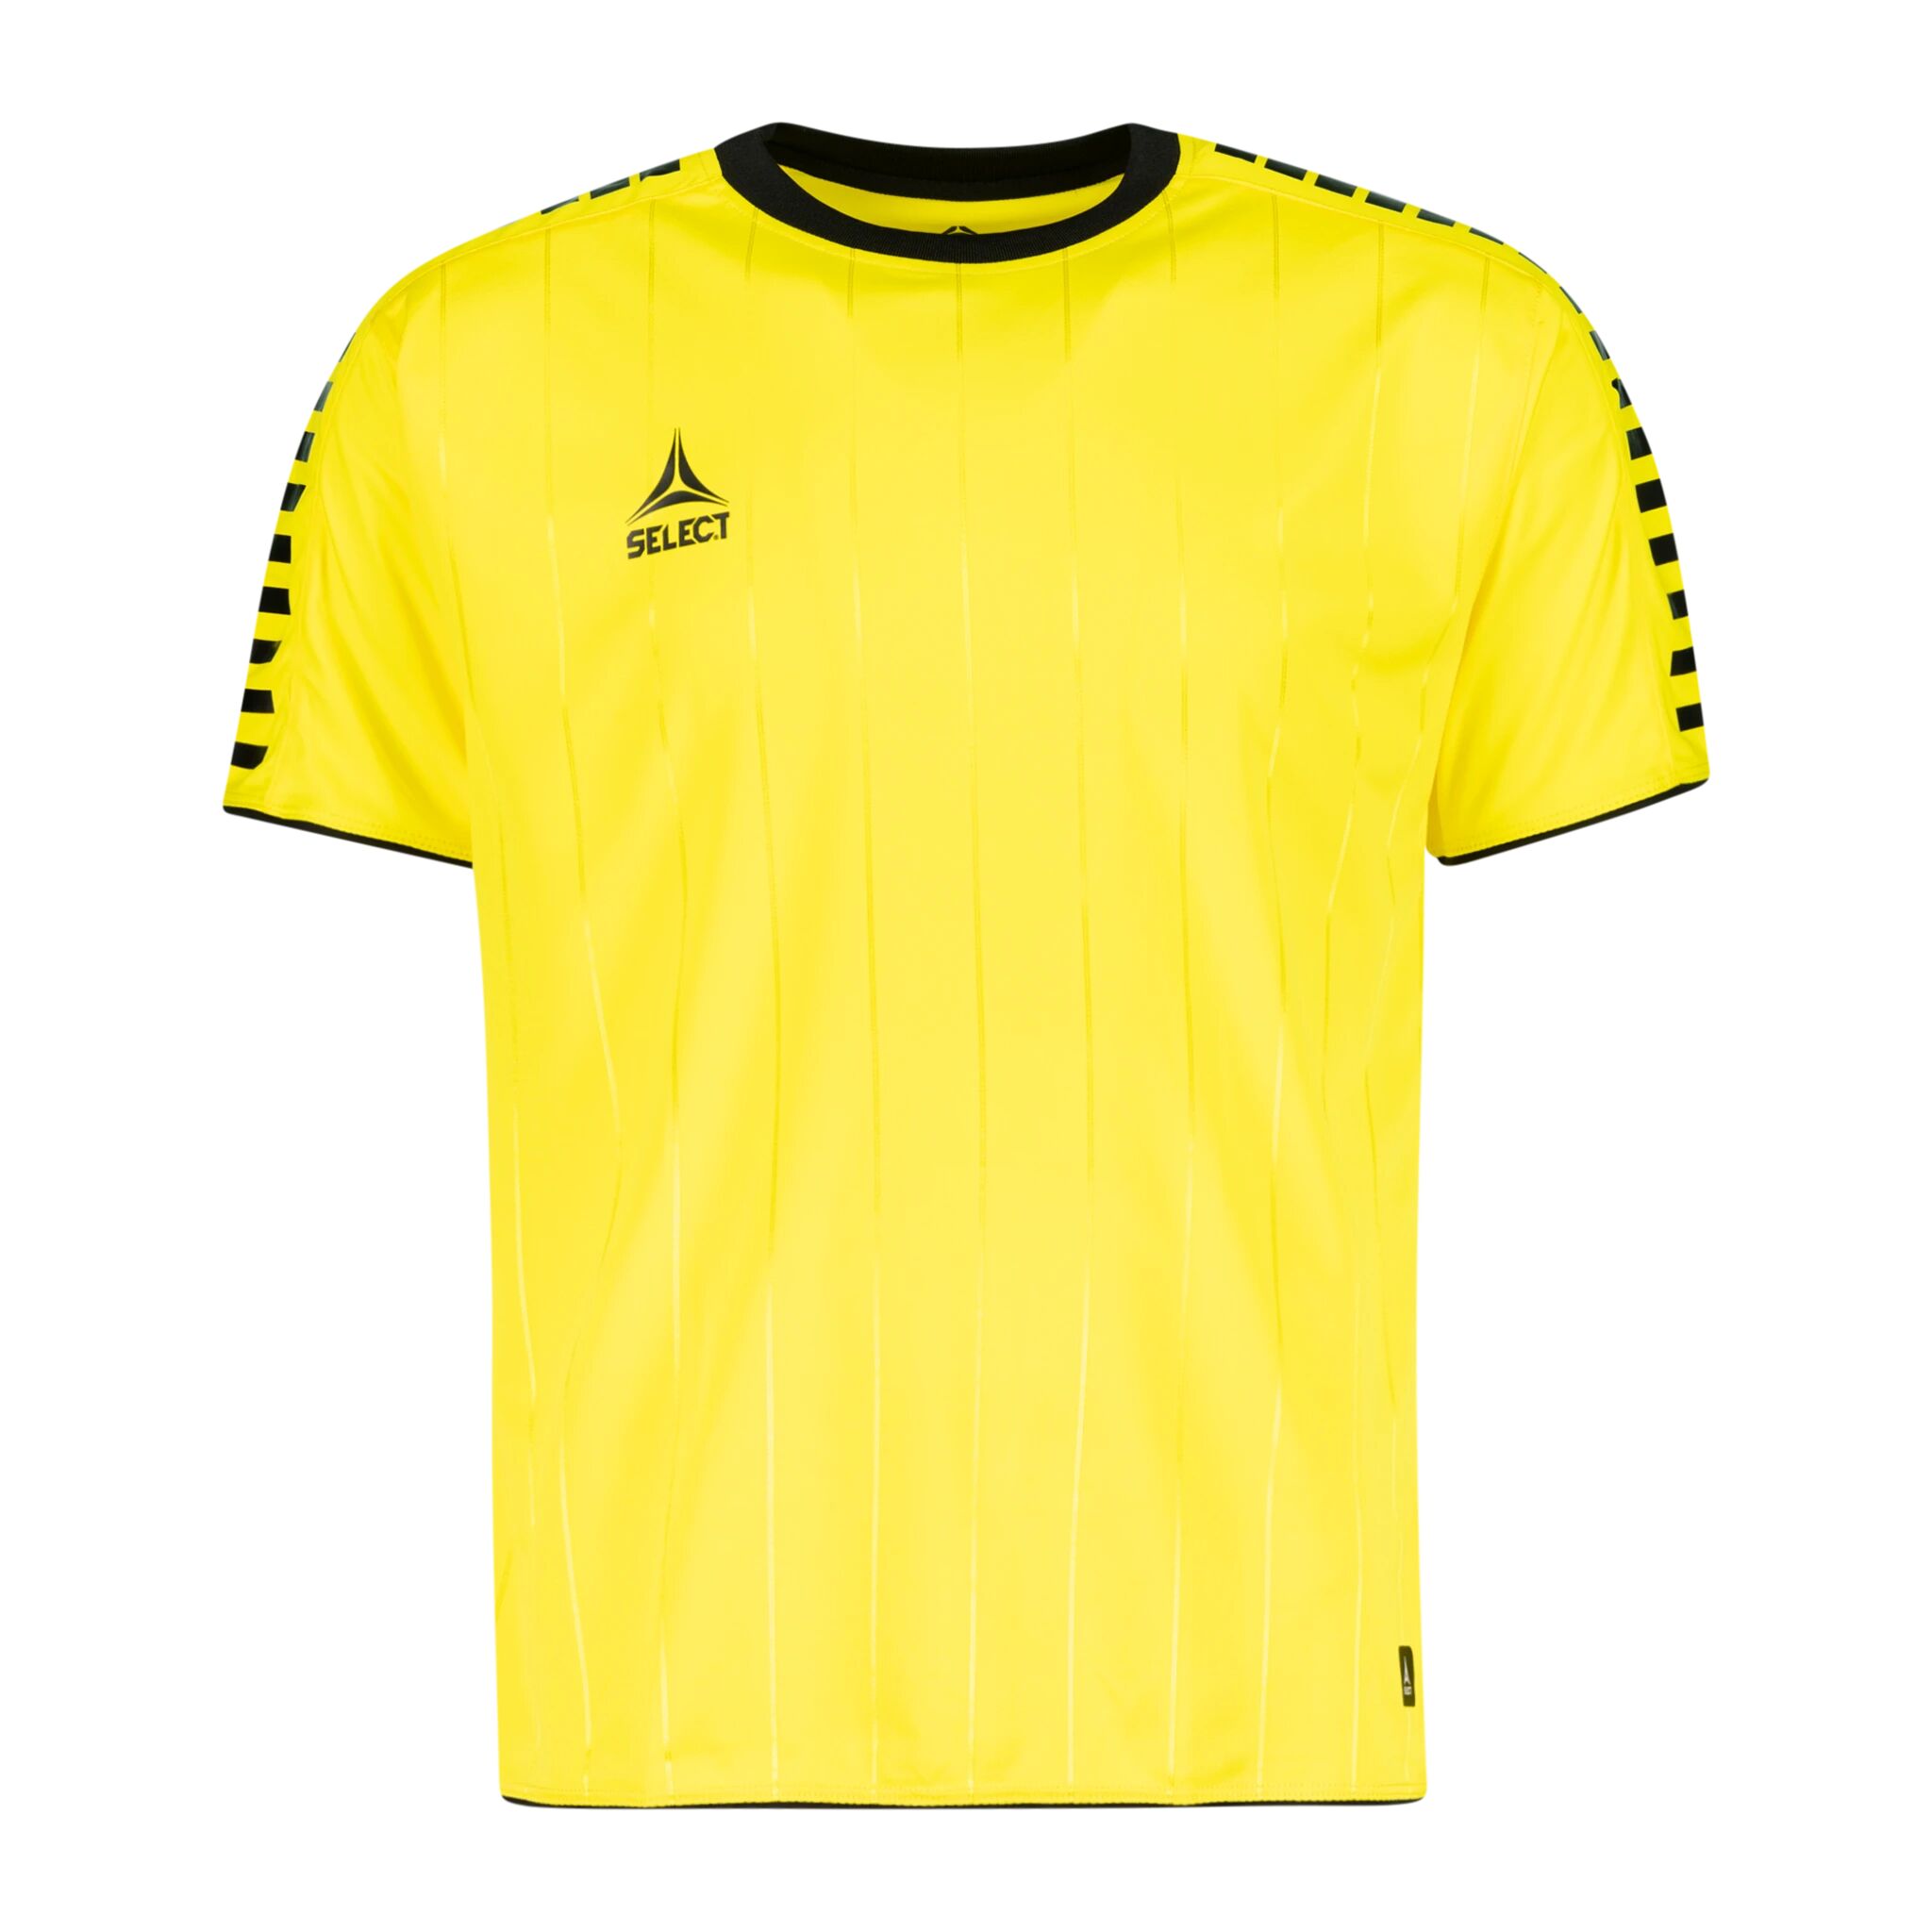 Select Player shirt S/S Argentina, fotballtrøye senior XL Yellow/Black